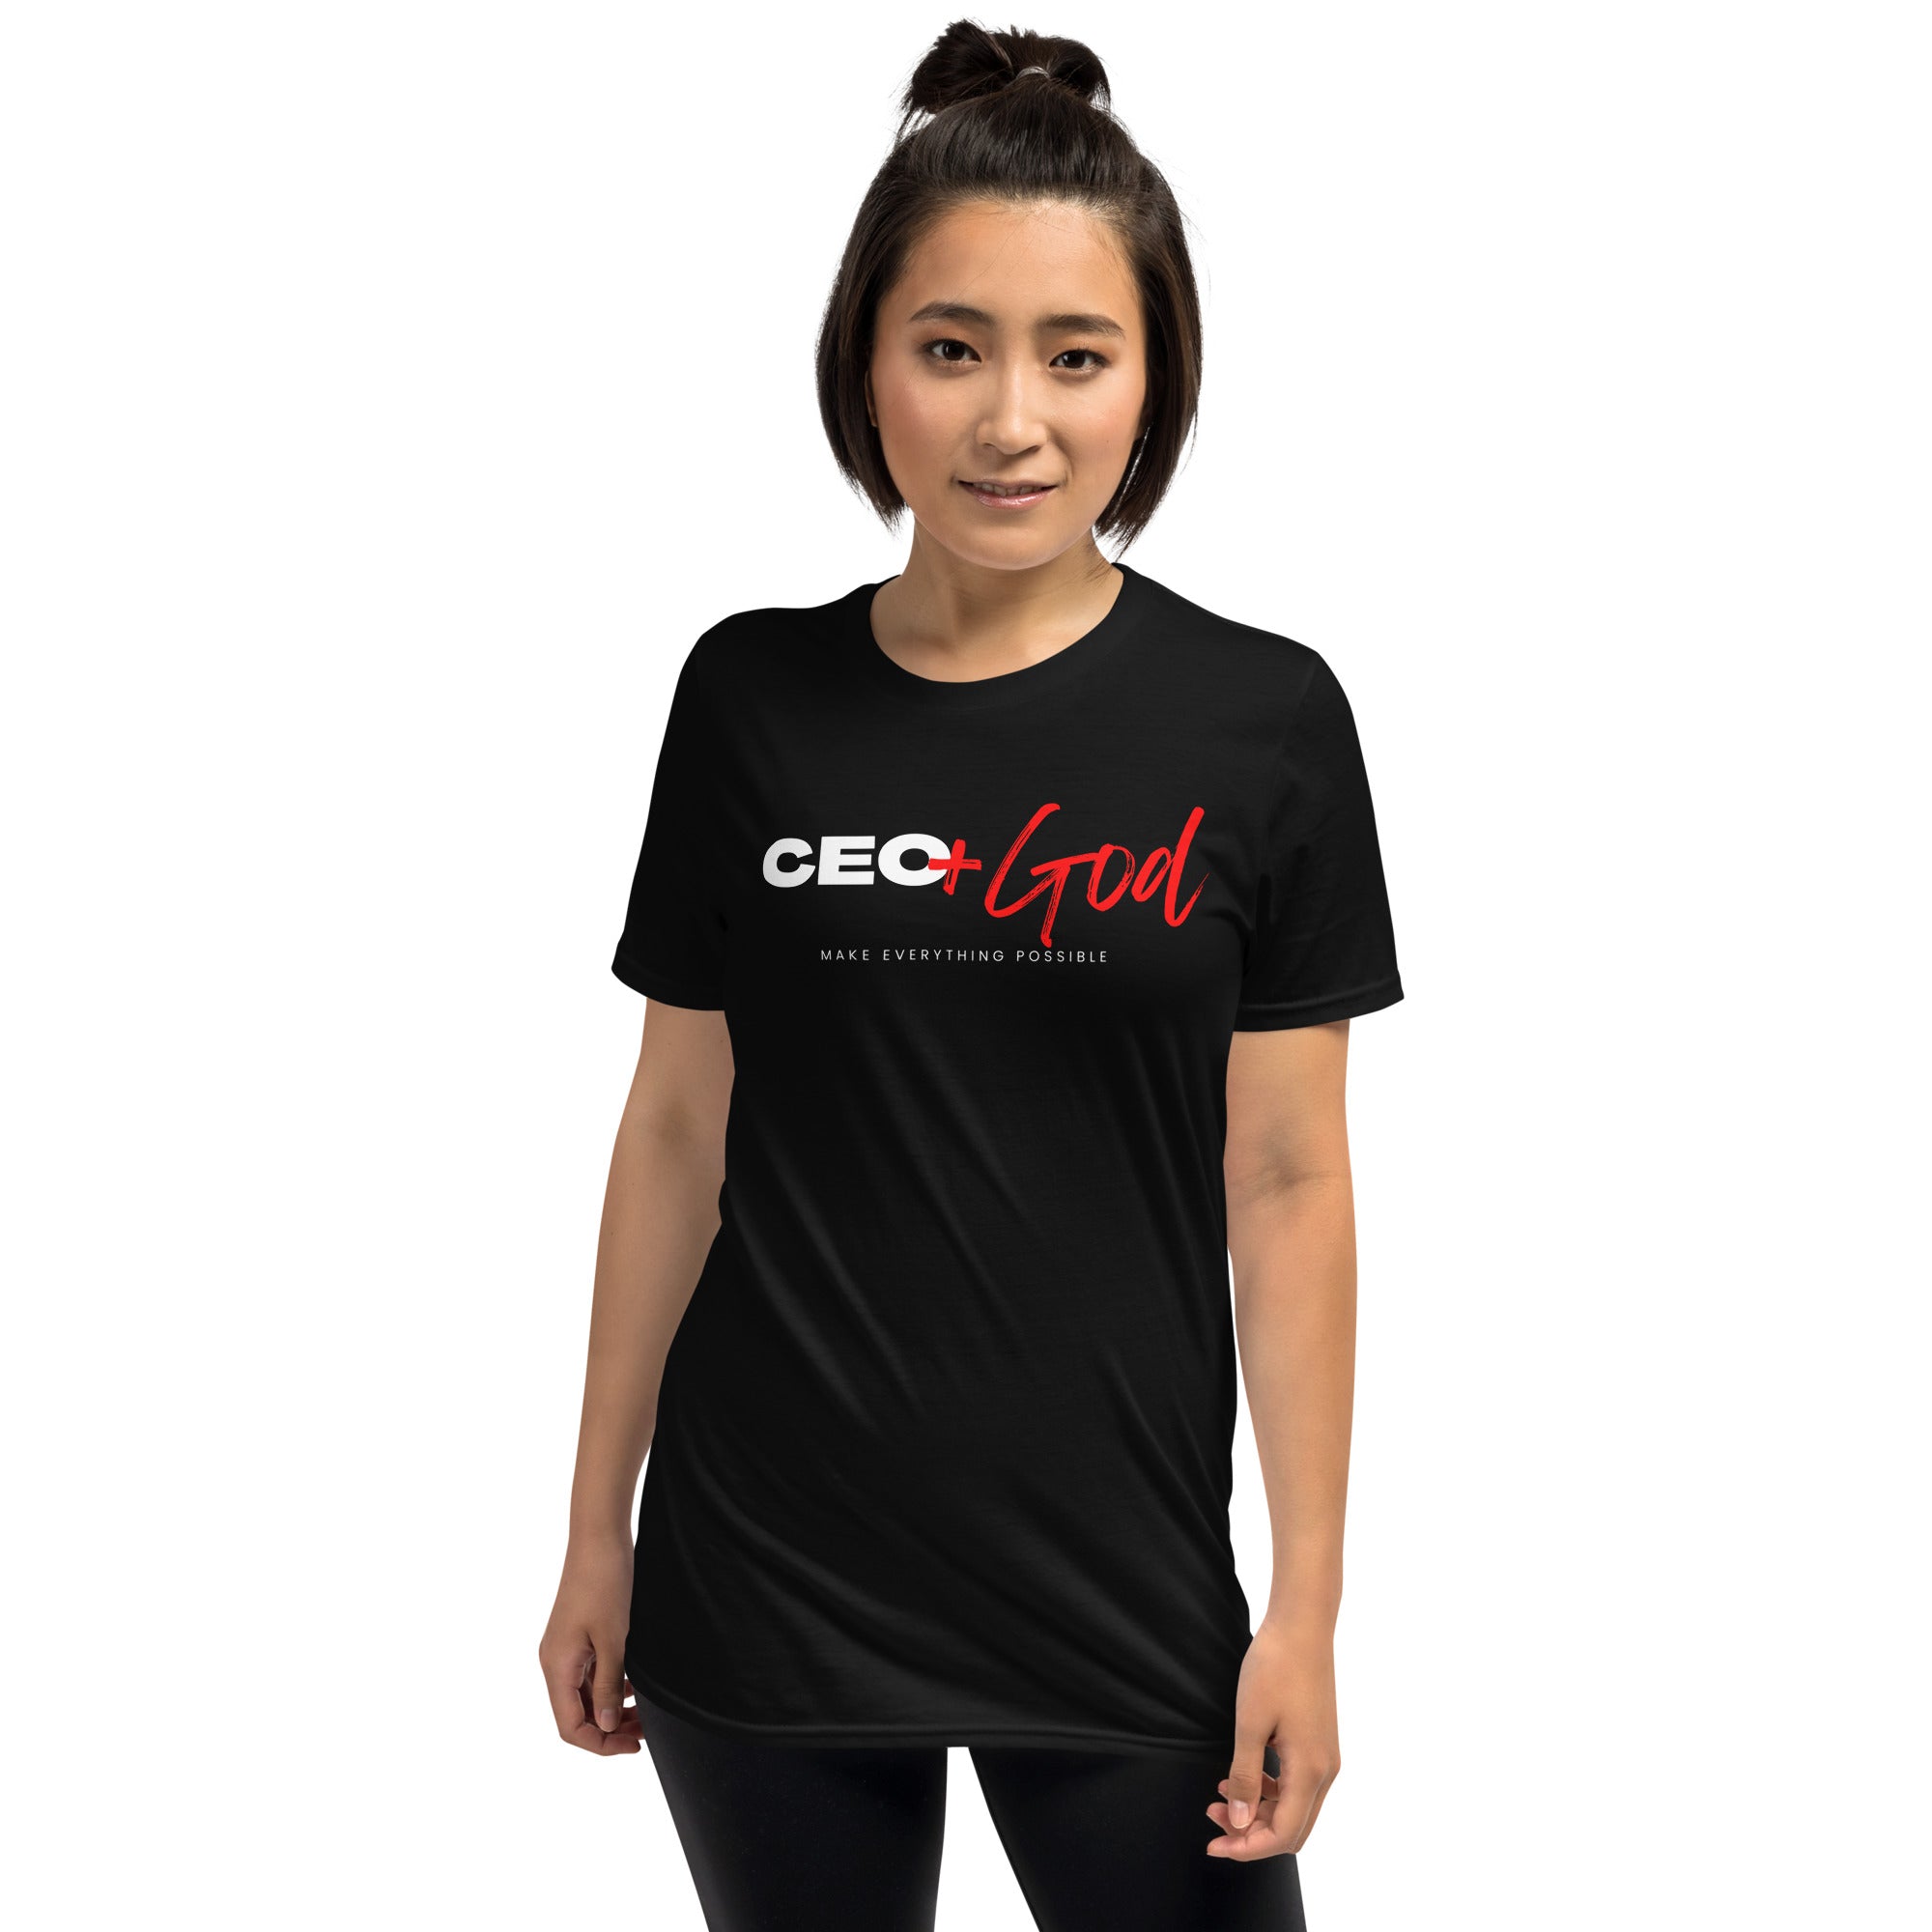 Girl + Goals "CEO + God" Unisex T-Shirt - Black